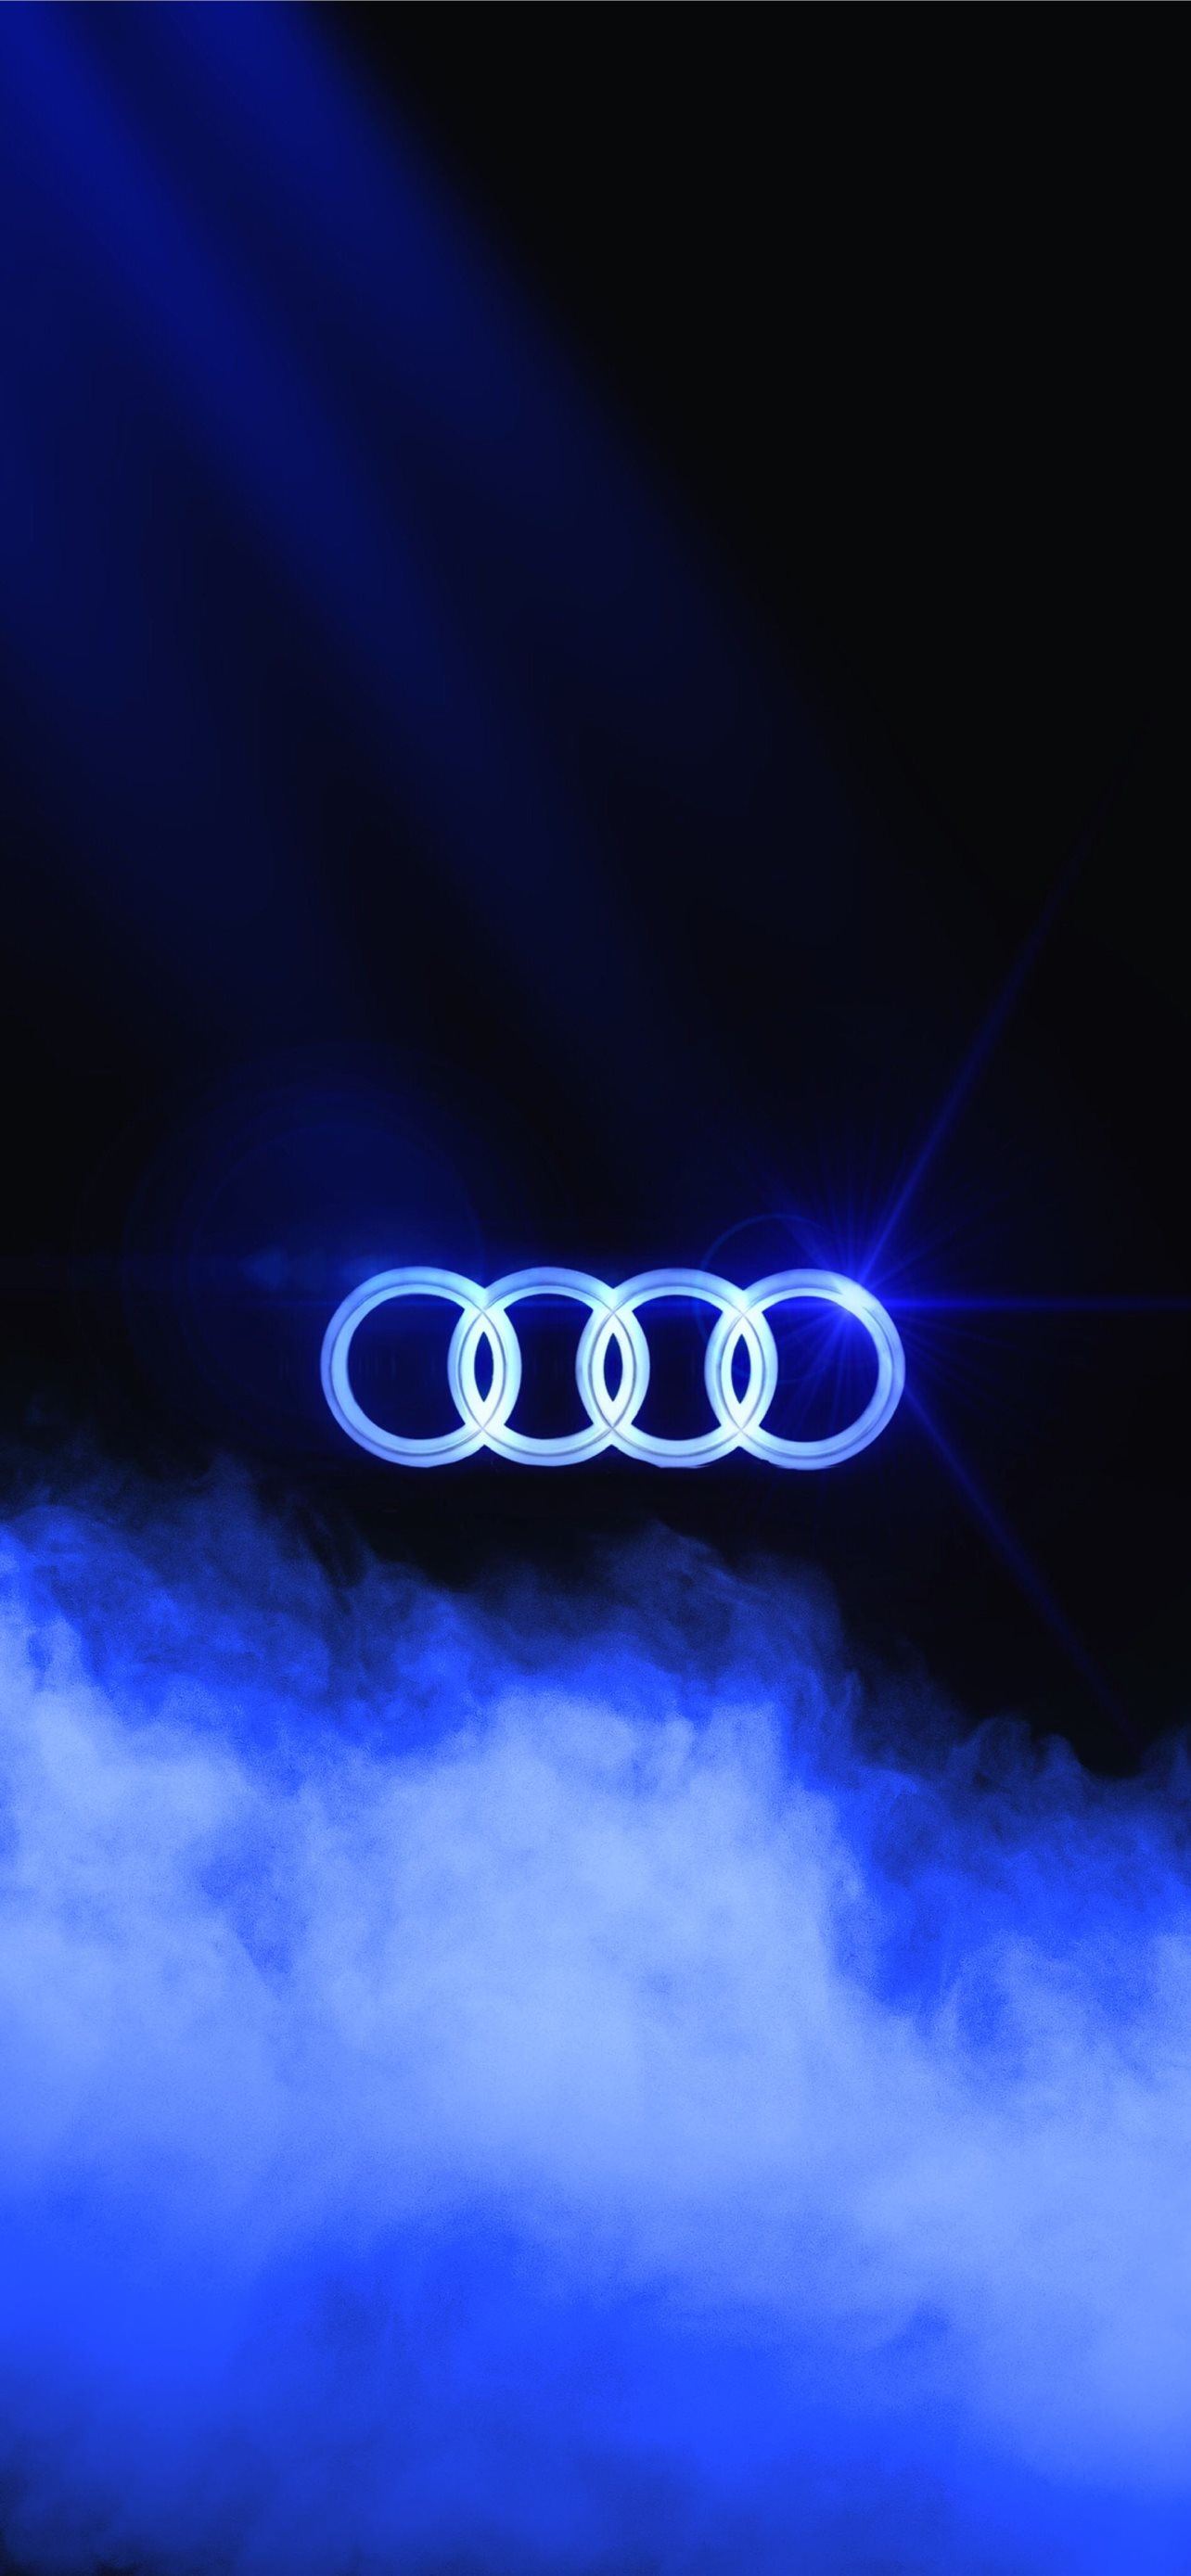 Audi logo iphone wallpapers free download